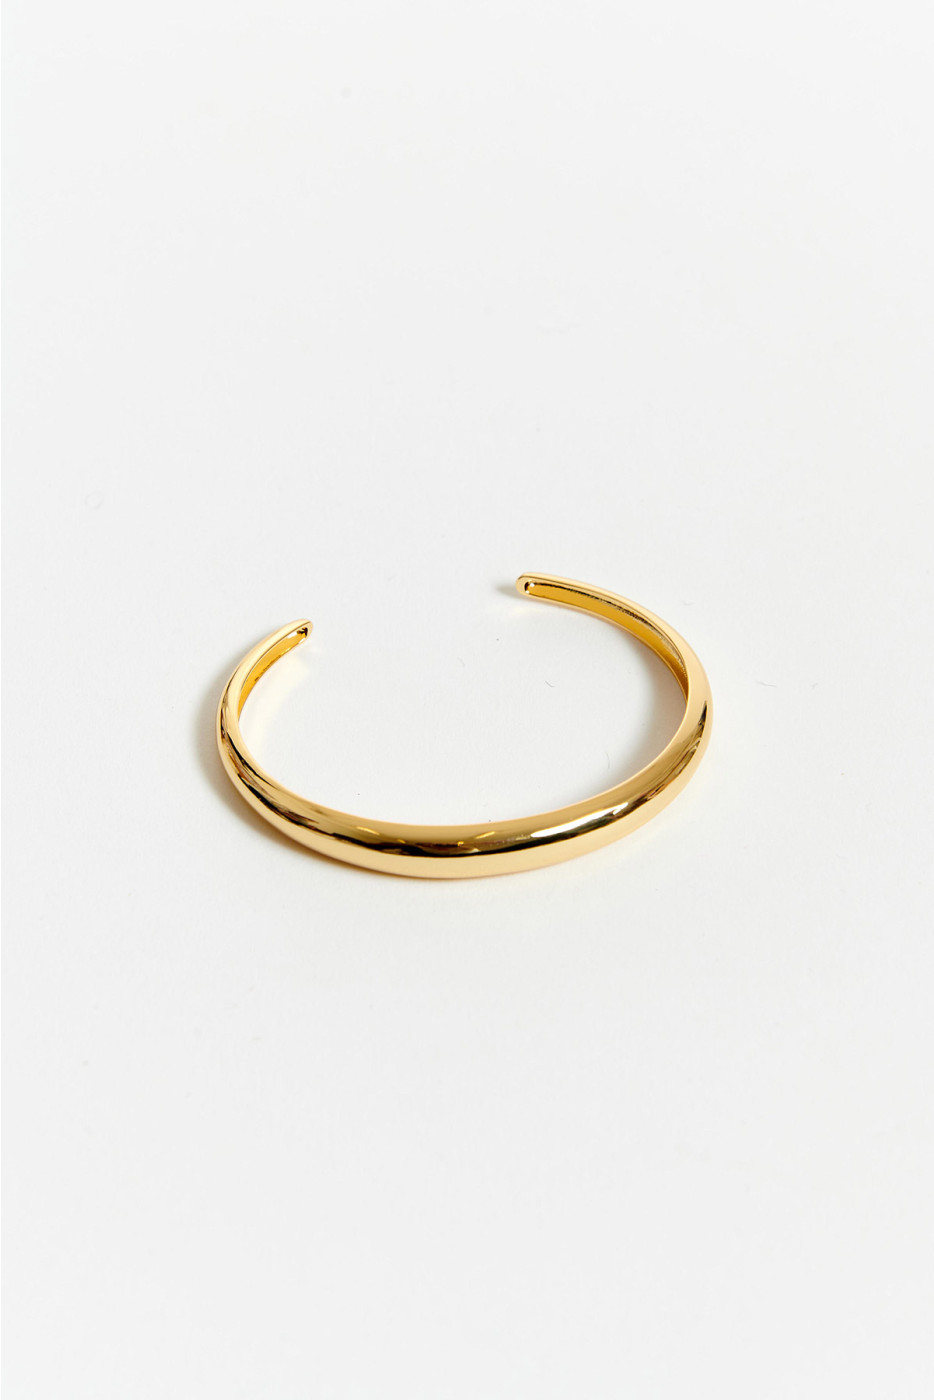 DOMINIQUE Shashi® gold bracelet